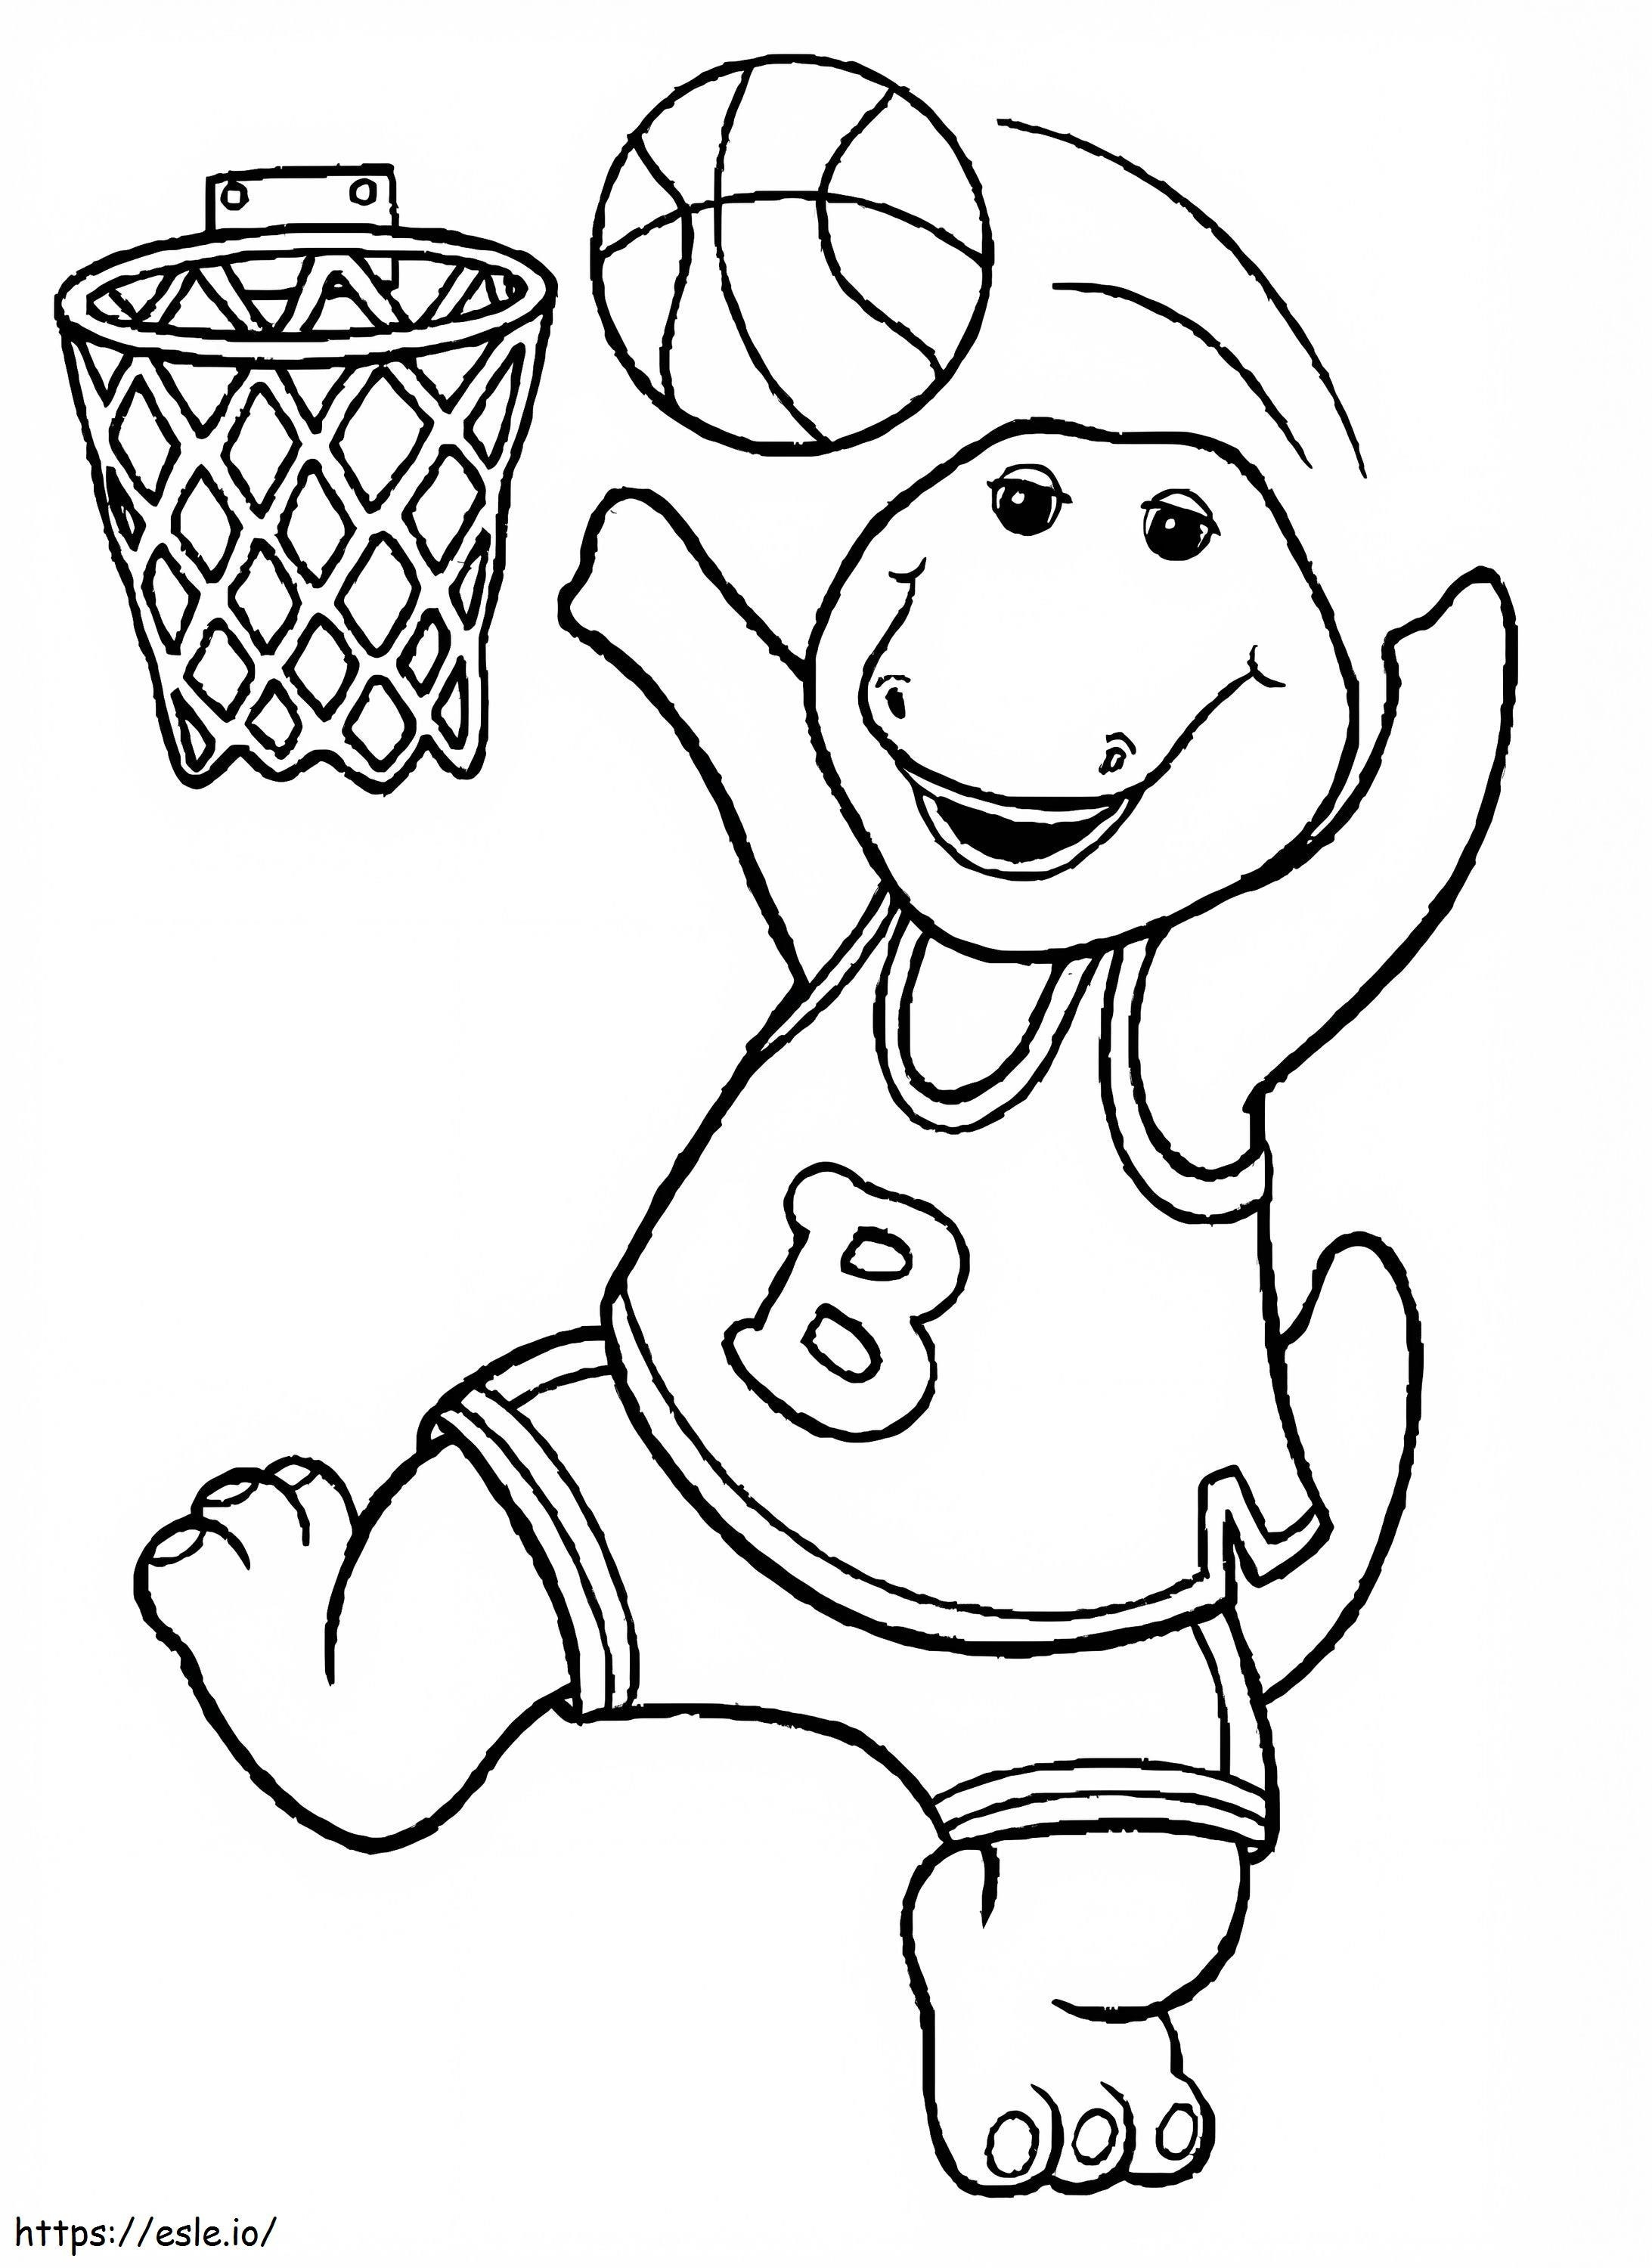 Barney joga basquete para colorir